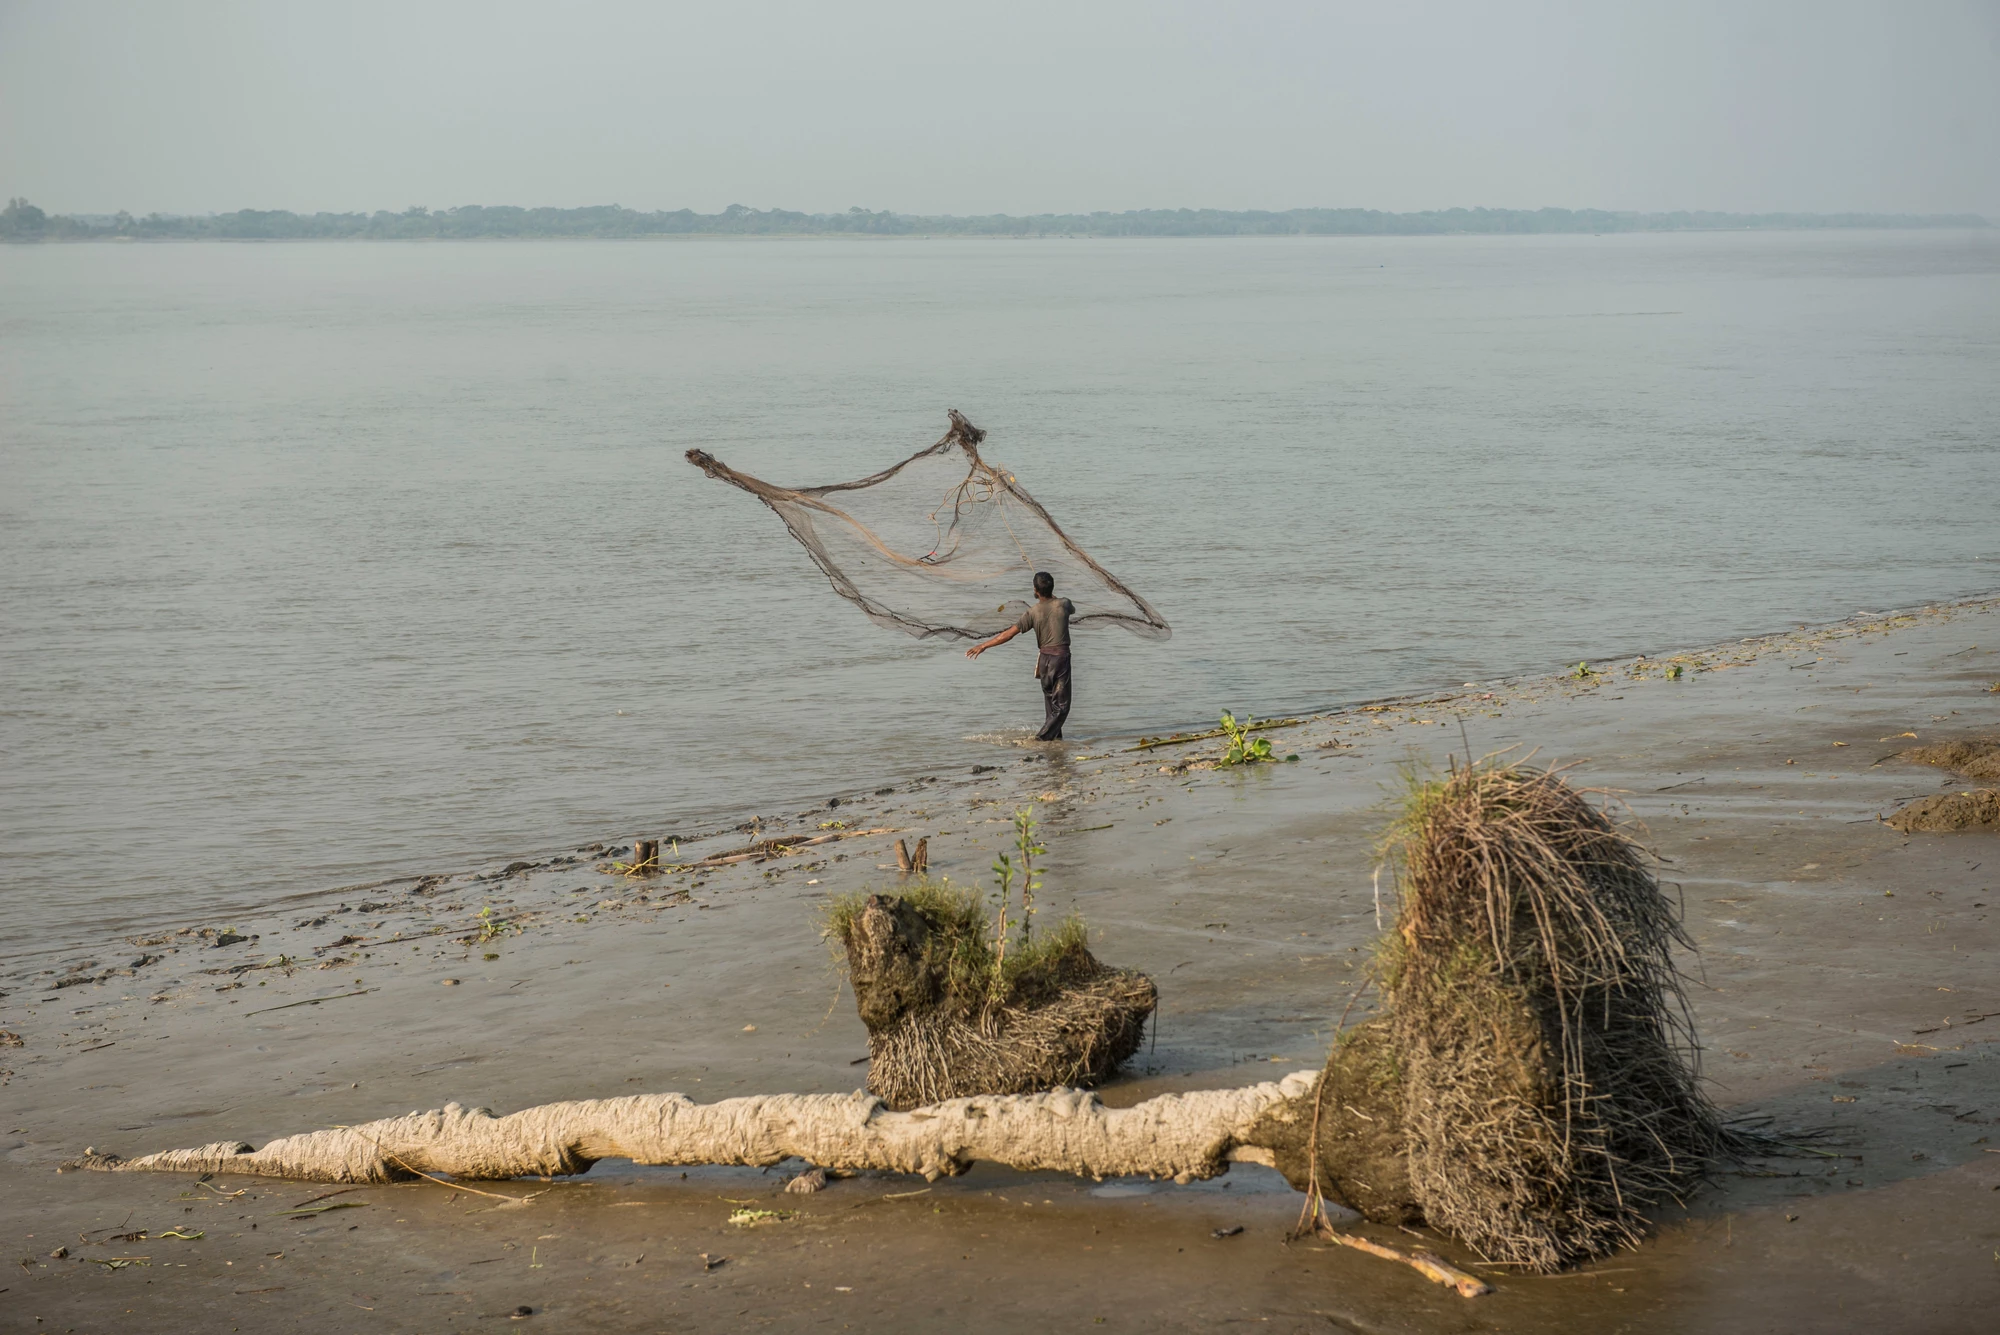 Bangladesh coastal community 